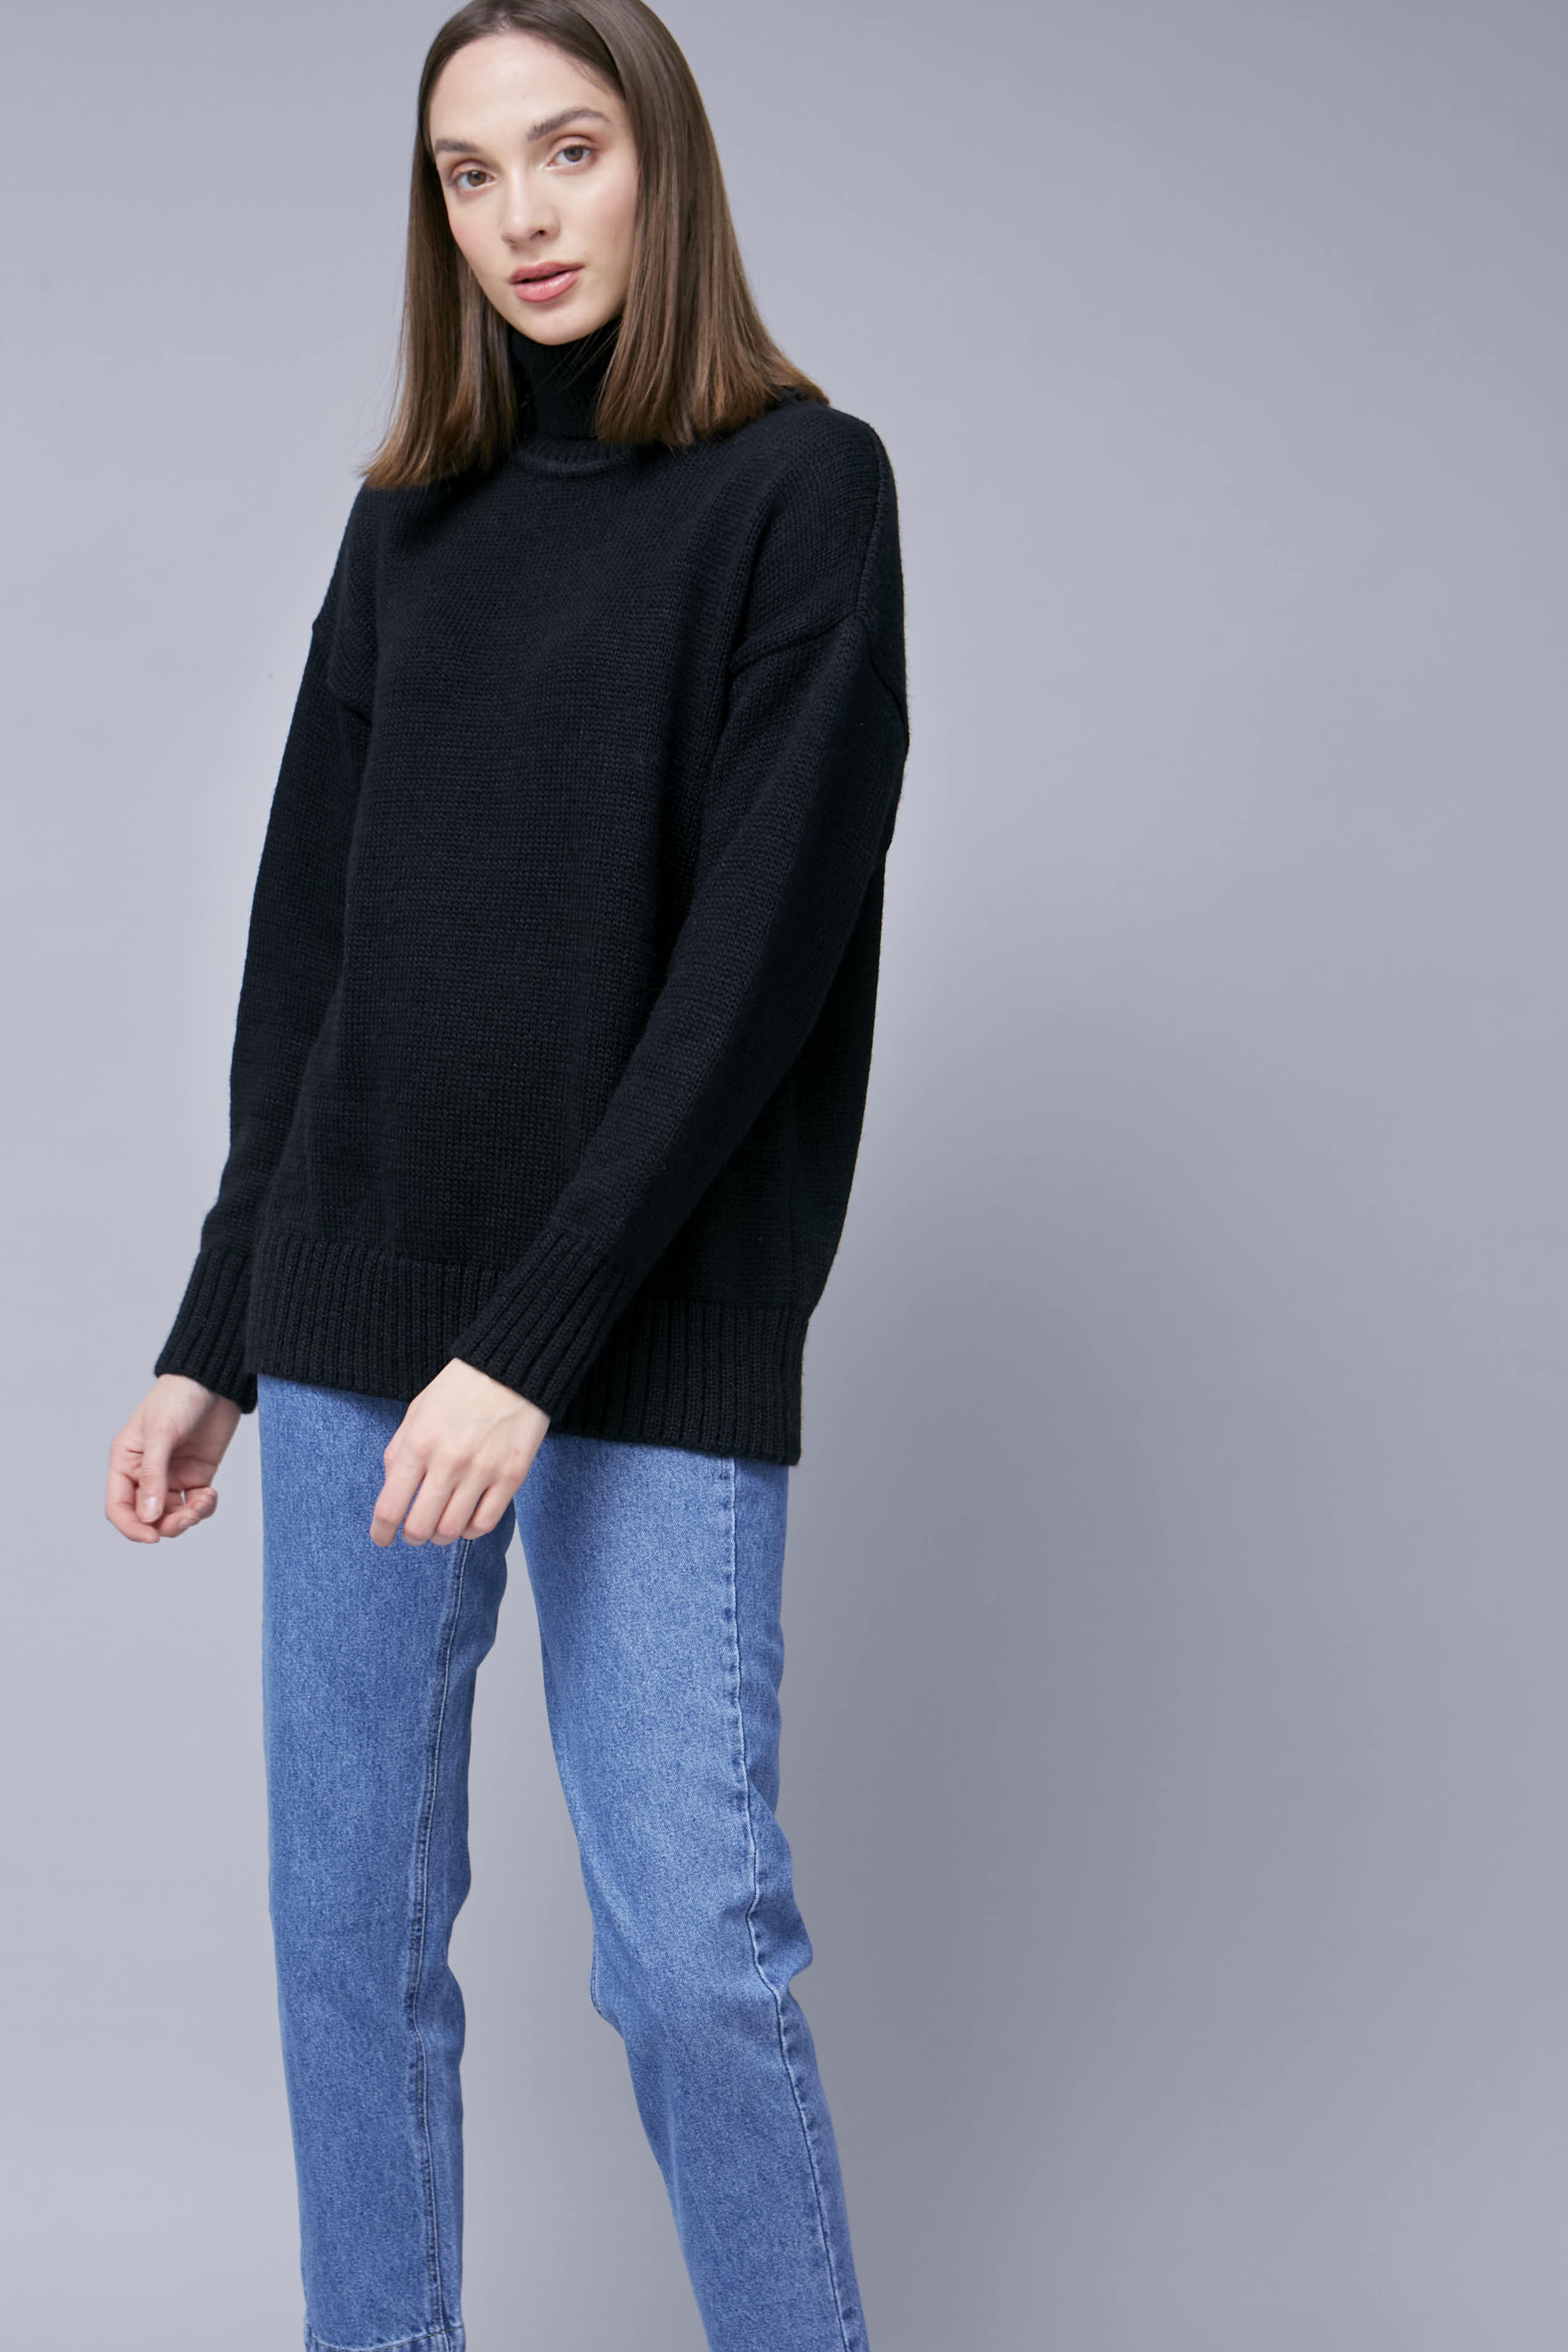 Black knit turtleneck sweater, photo 1